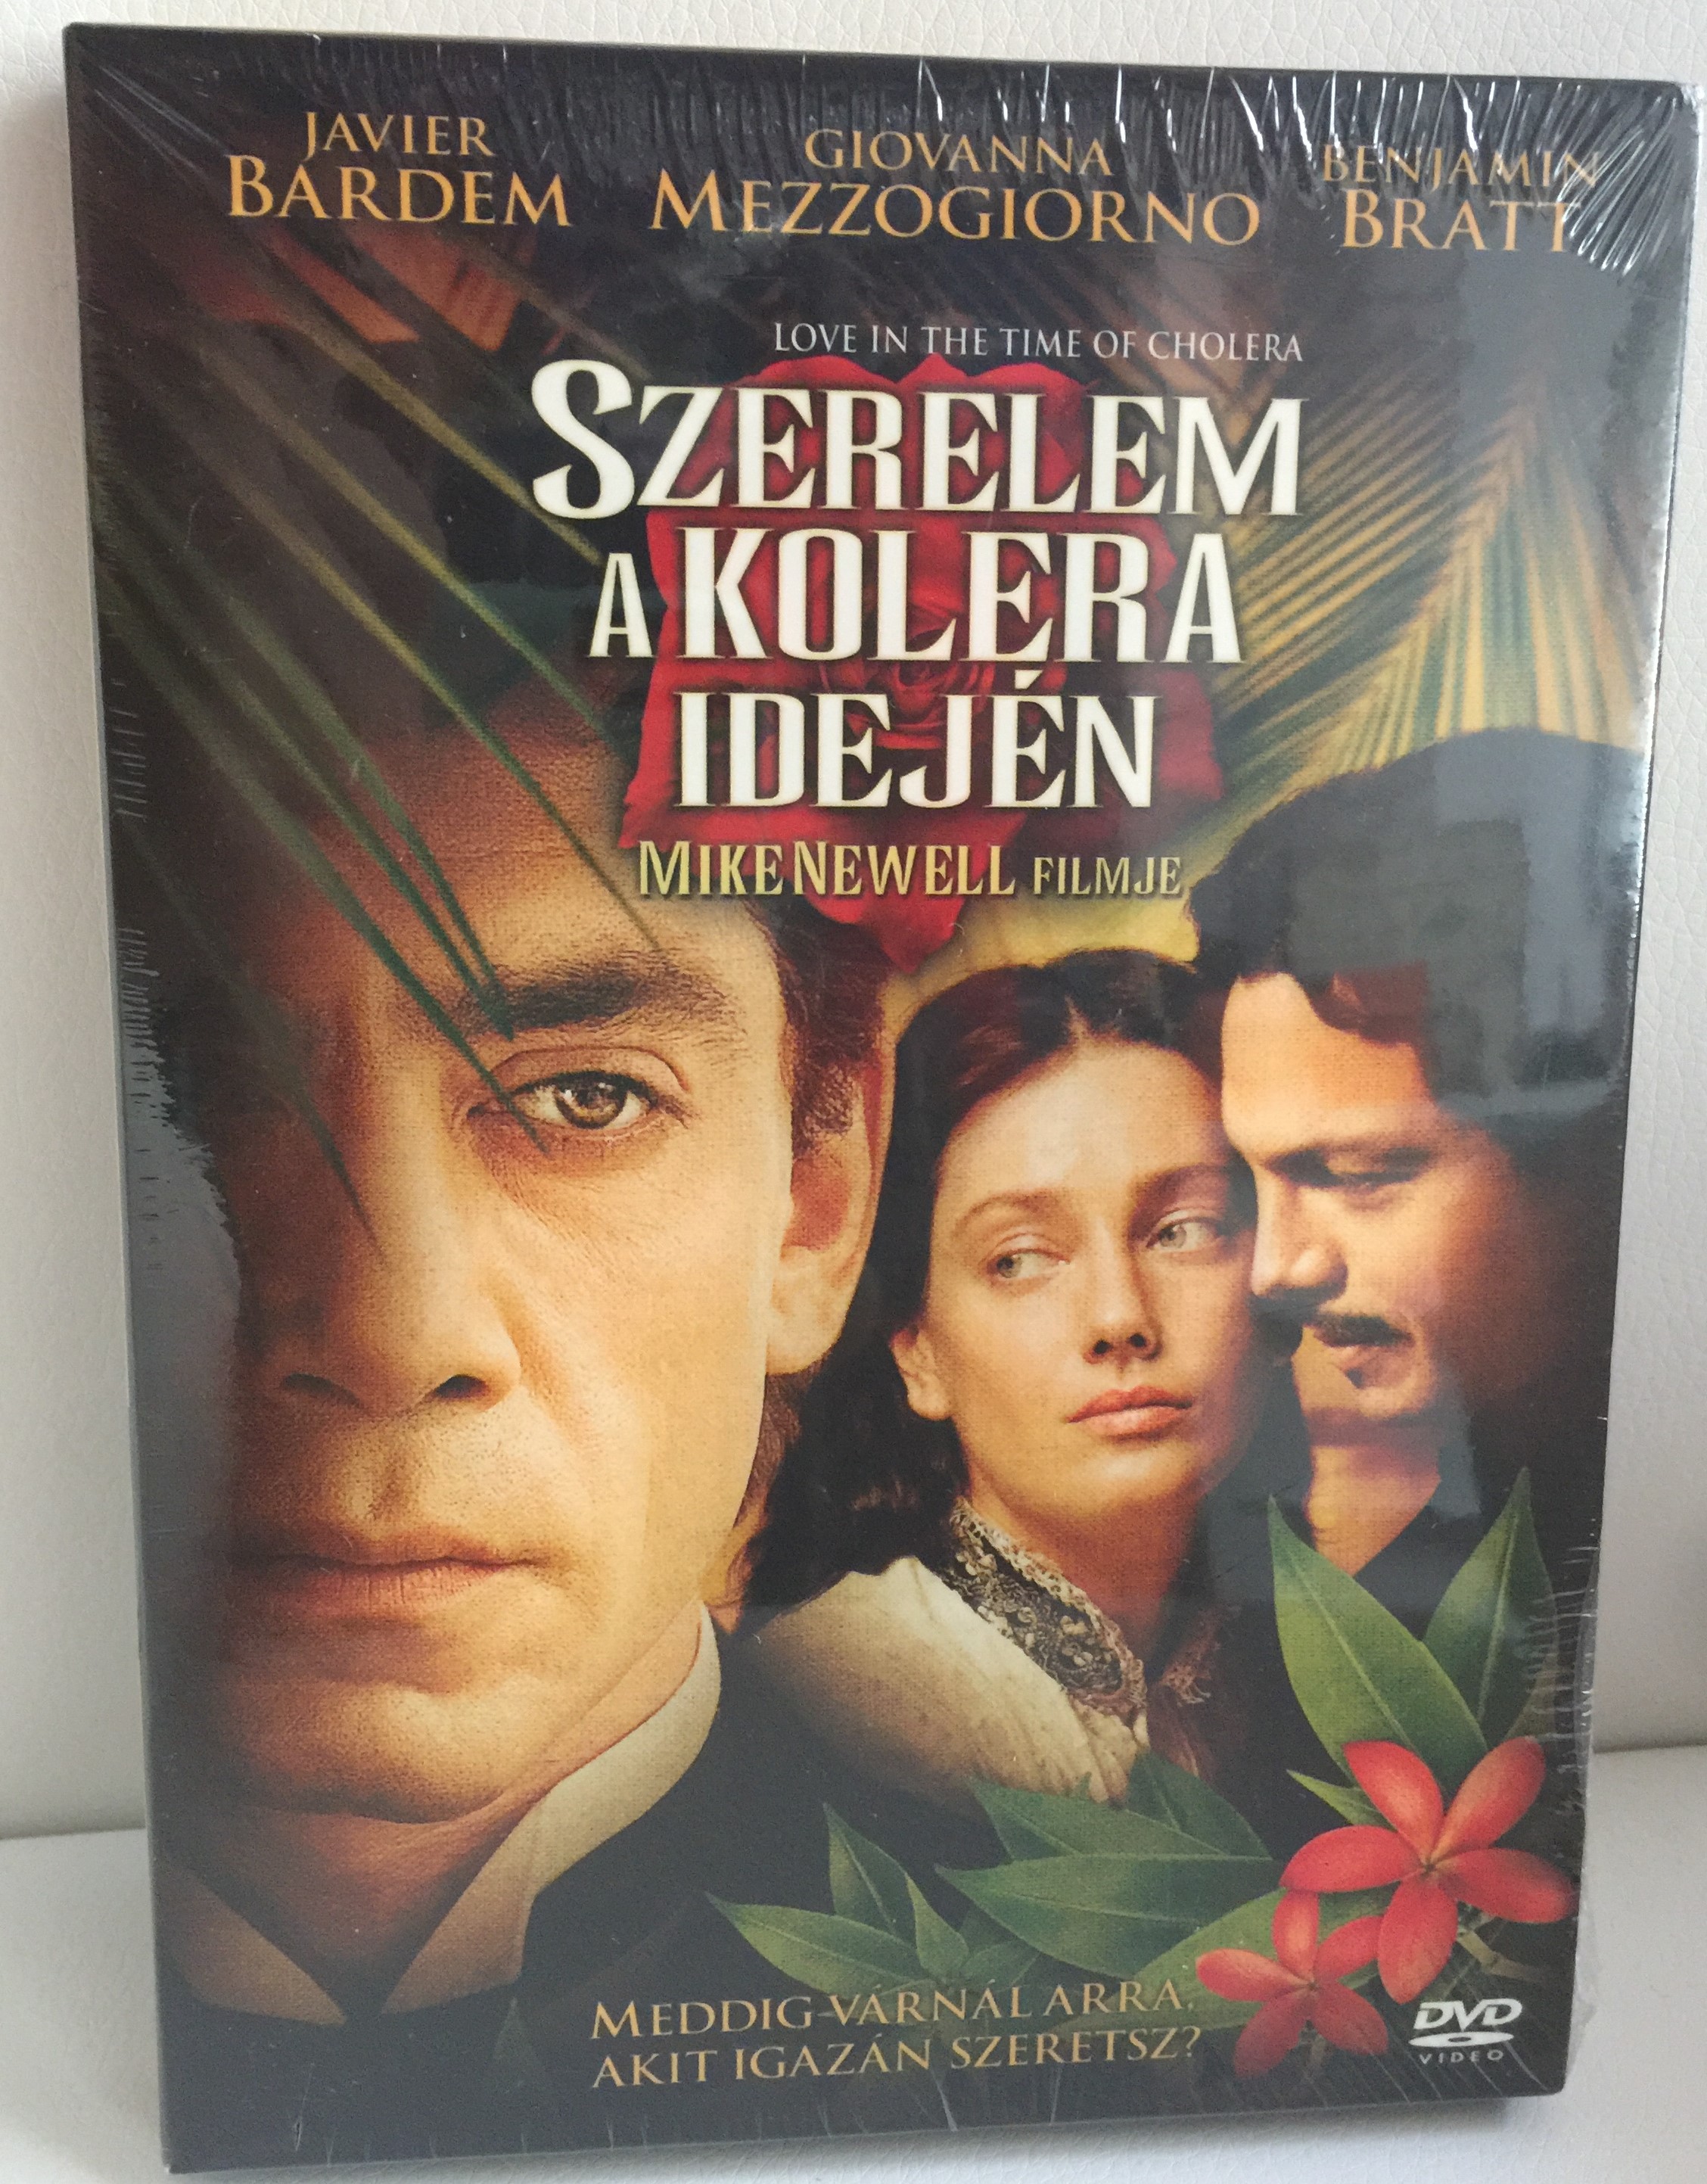 Love in the time of cholera DVD 2007 Szerelem a kolera idején 1